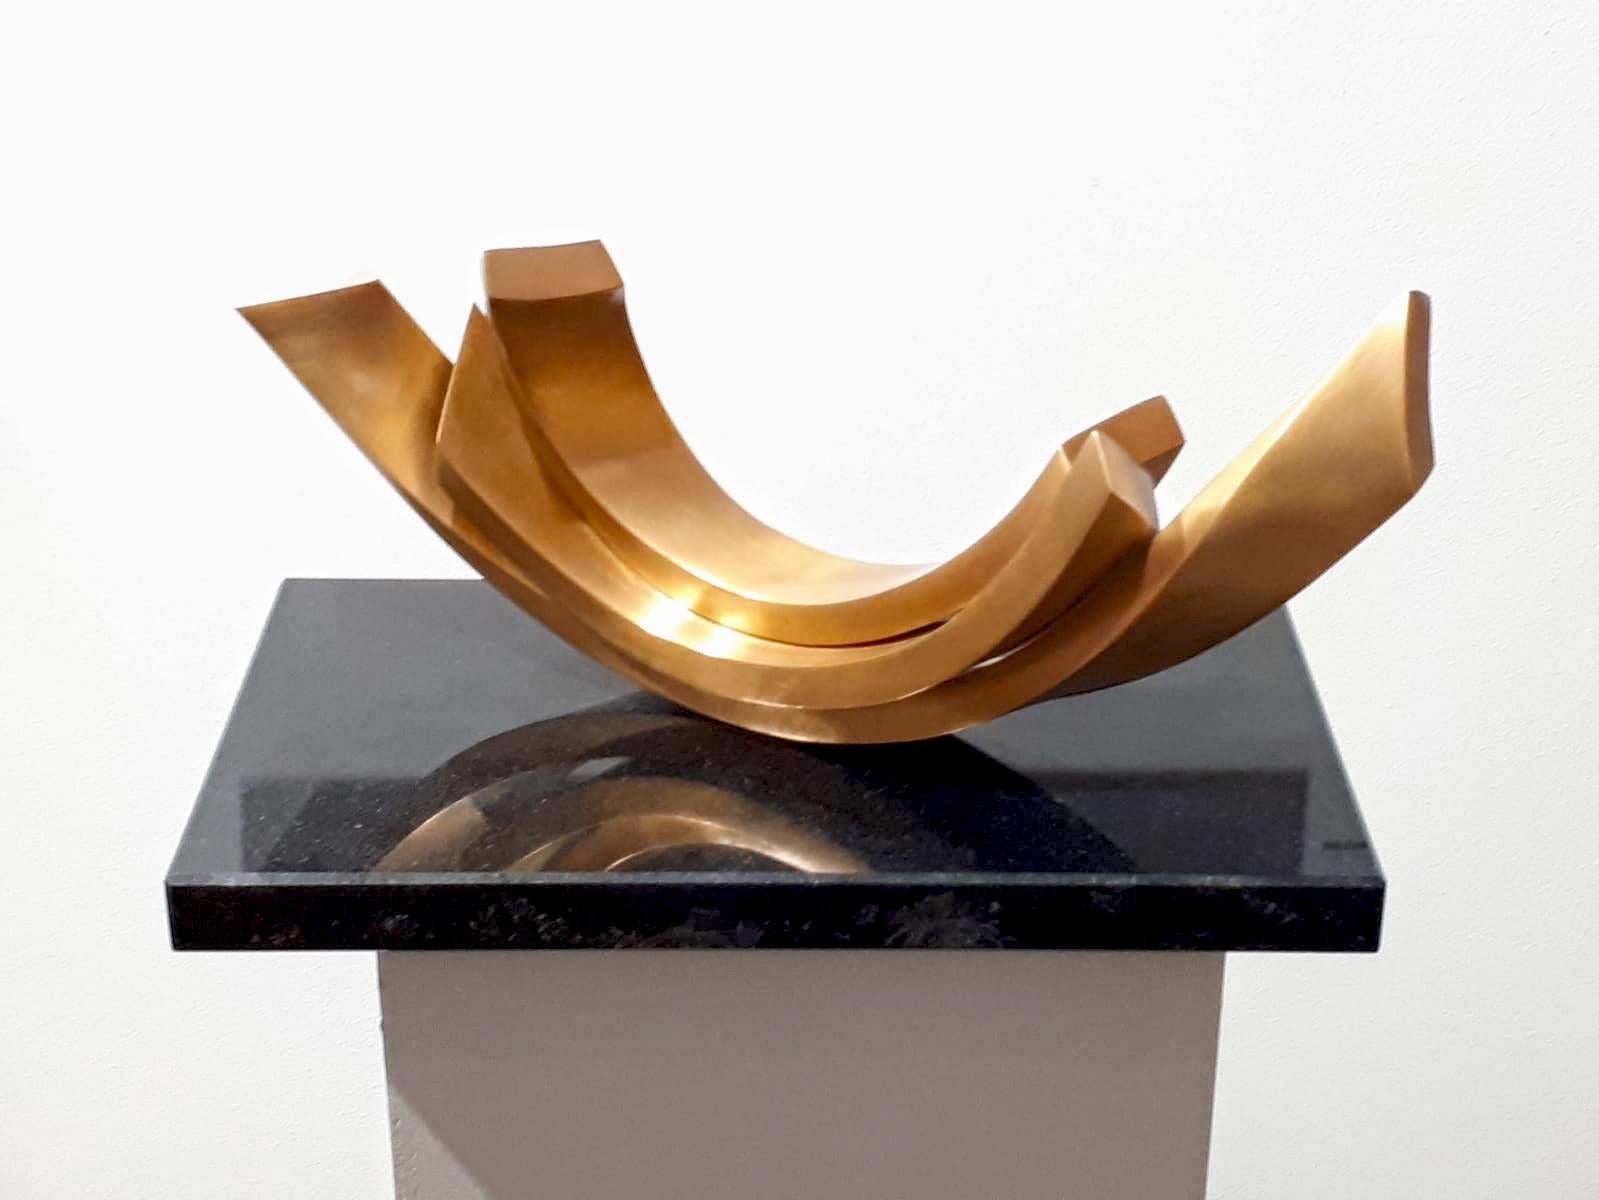 Artist: Kuno Vollet

Title: Balance 2 

Materials: Bronze

Size: 42 x 22 cm

_______________________________________________________________________

This elegant original cast bronze sculpture by German artist Kuno Vollet brings energy into any art